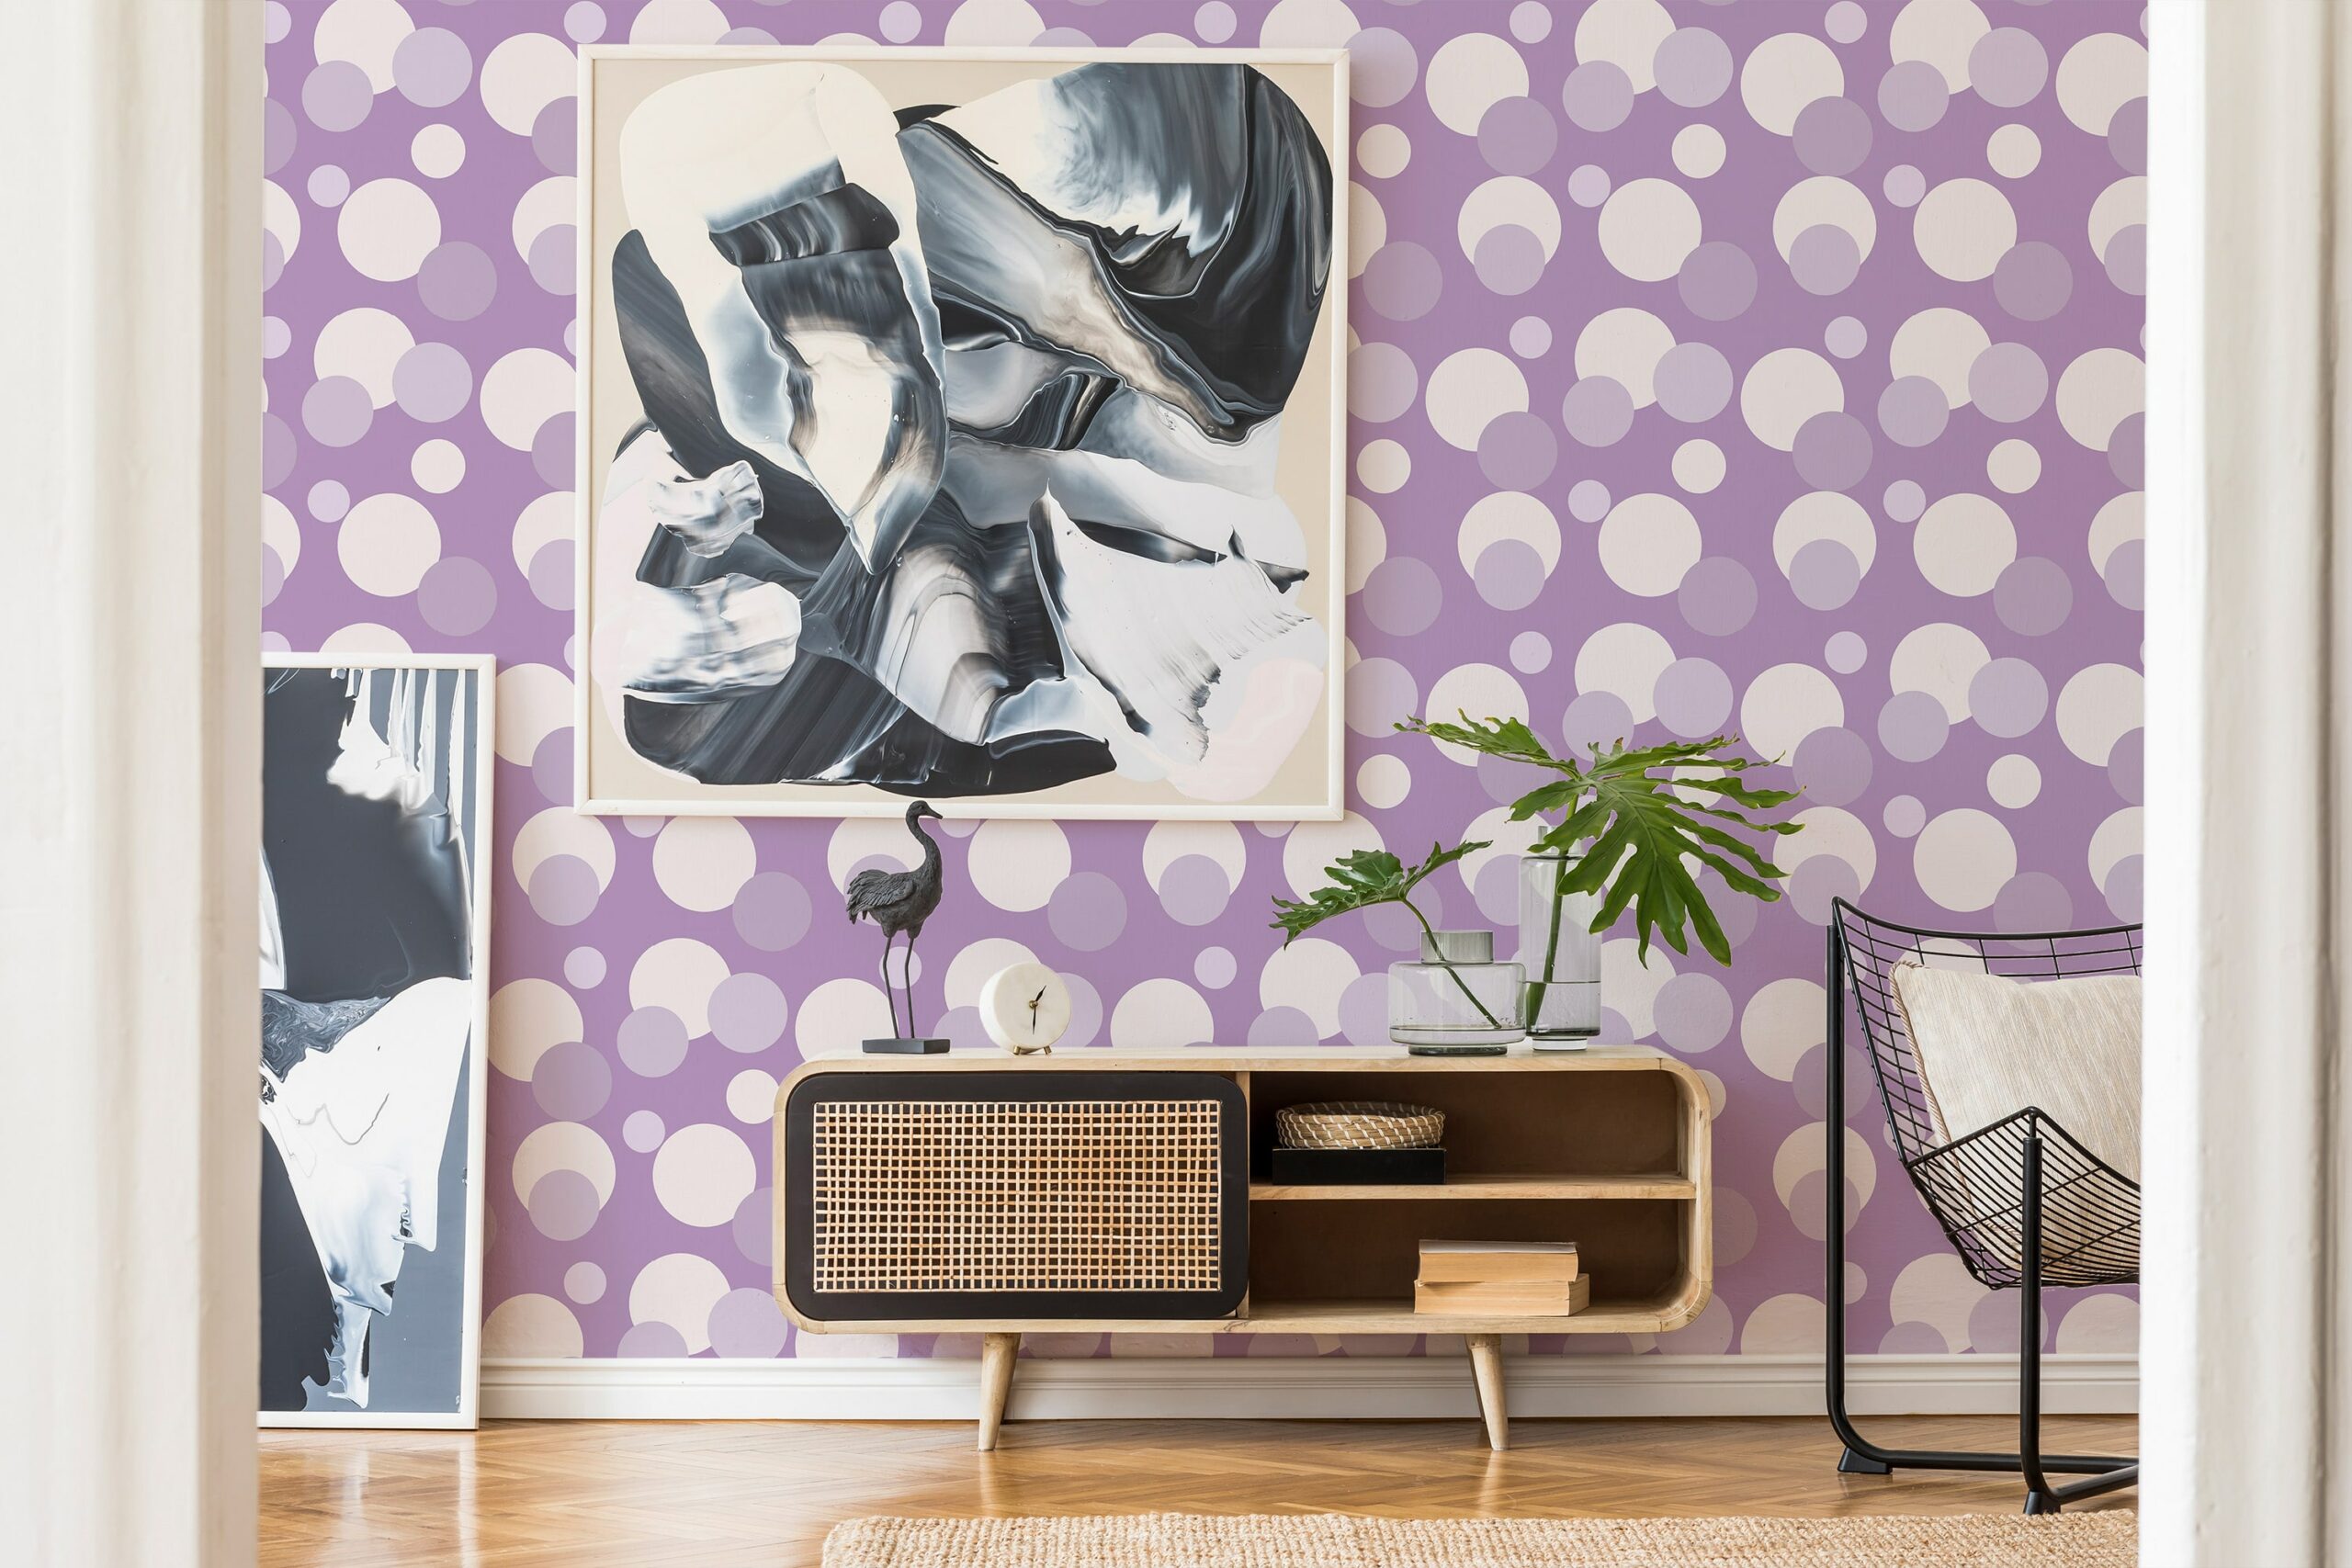 polka dot purple traditional wallpaper